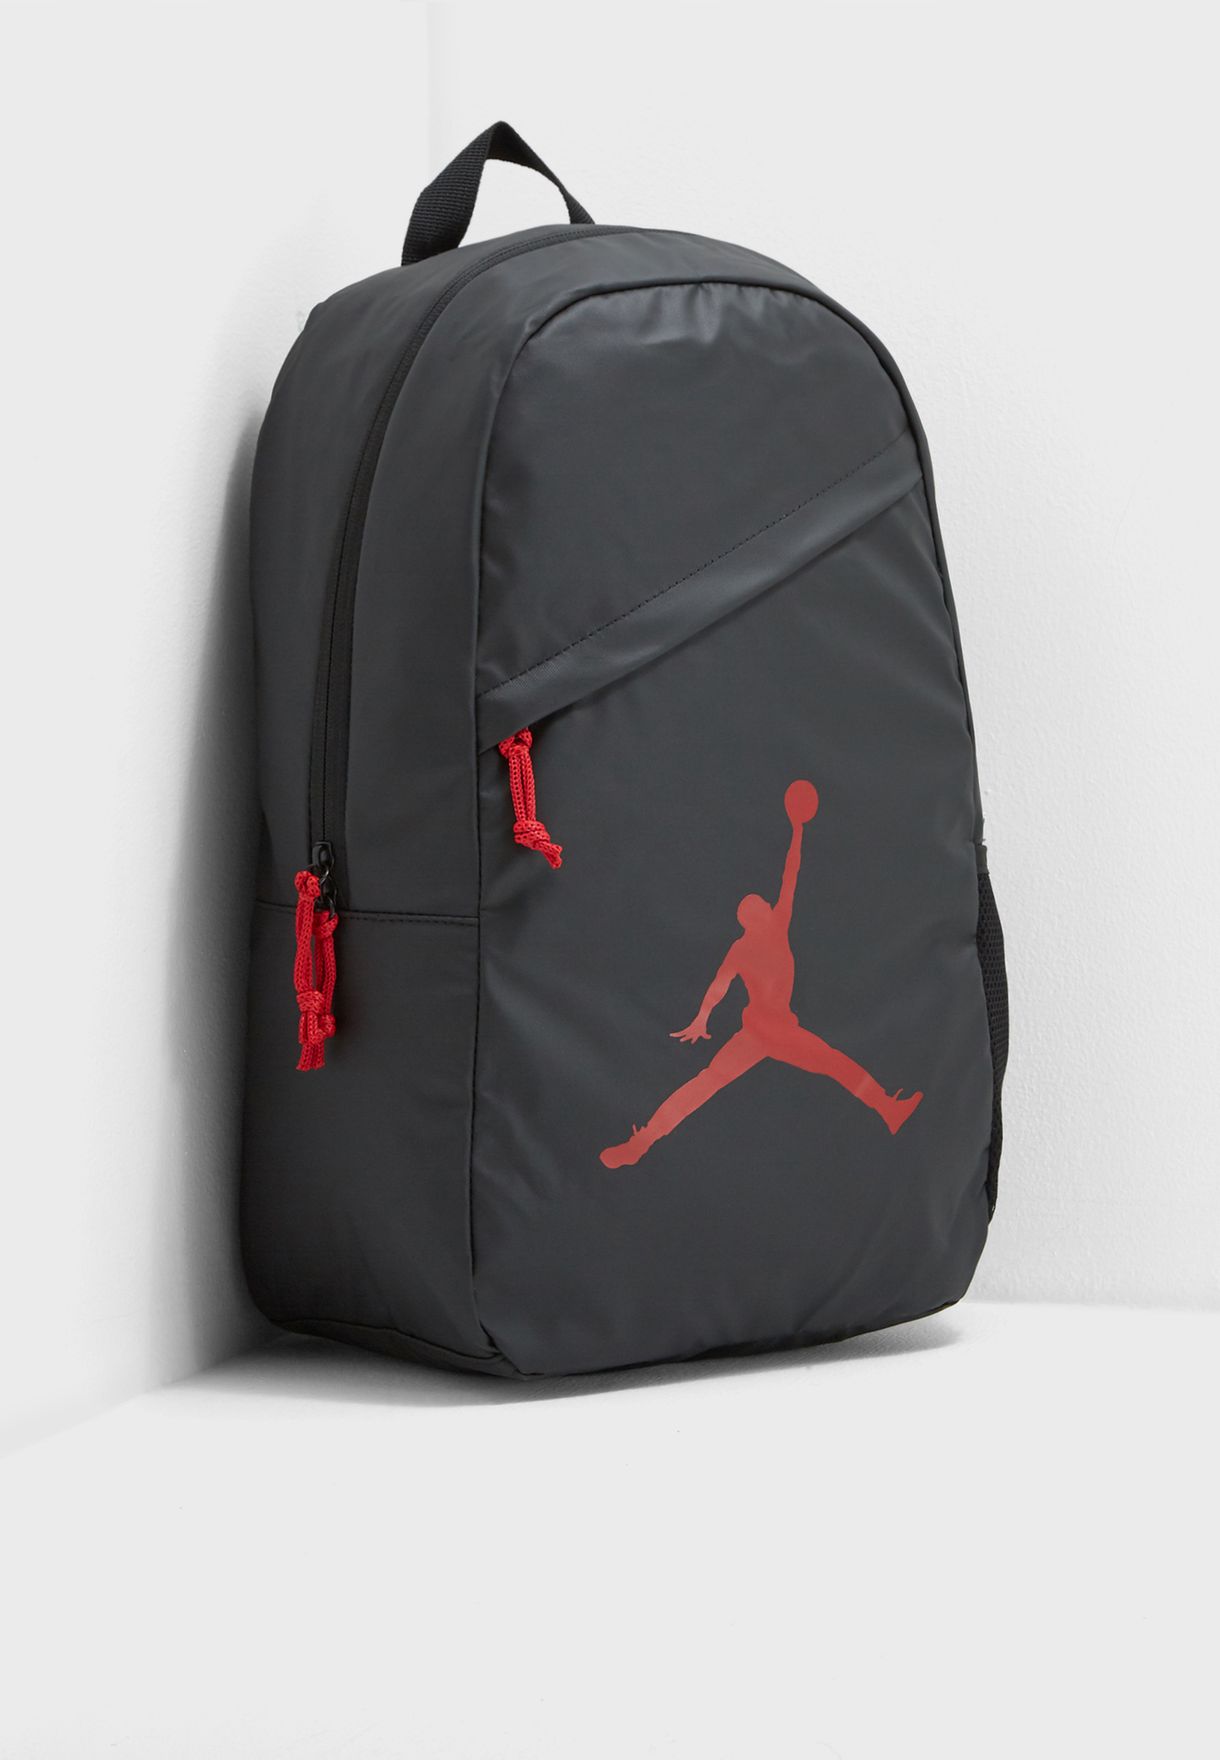 shop adidas backpacks